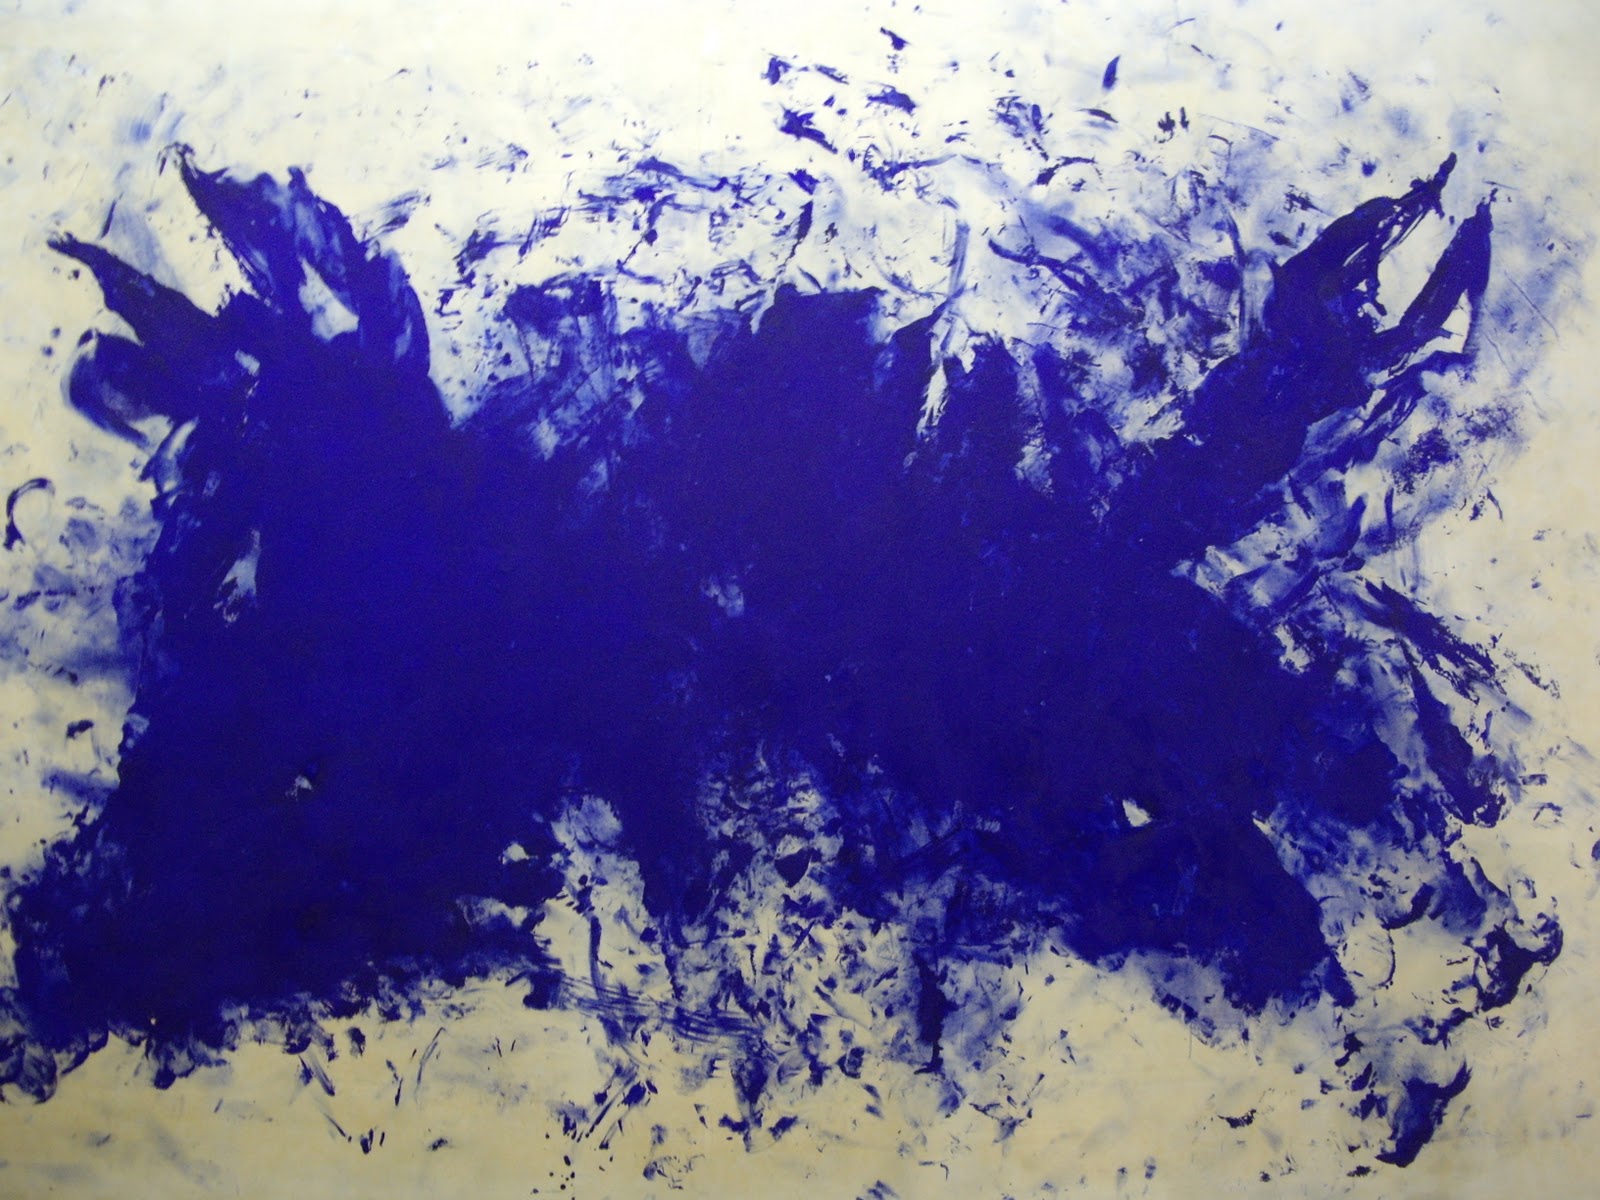 Groots blauw kannibalisme, een ode aan Tennessee Williams by Yves Klein - 1960 - 276 x 418 cm 